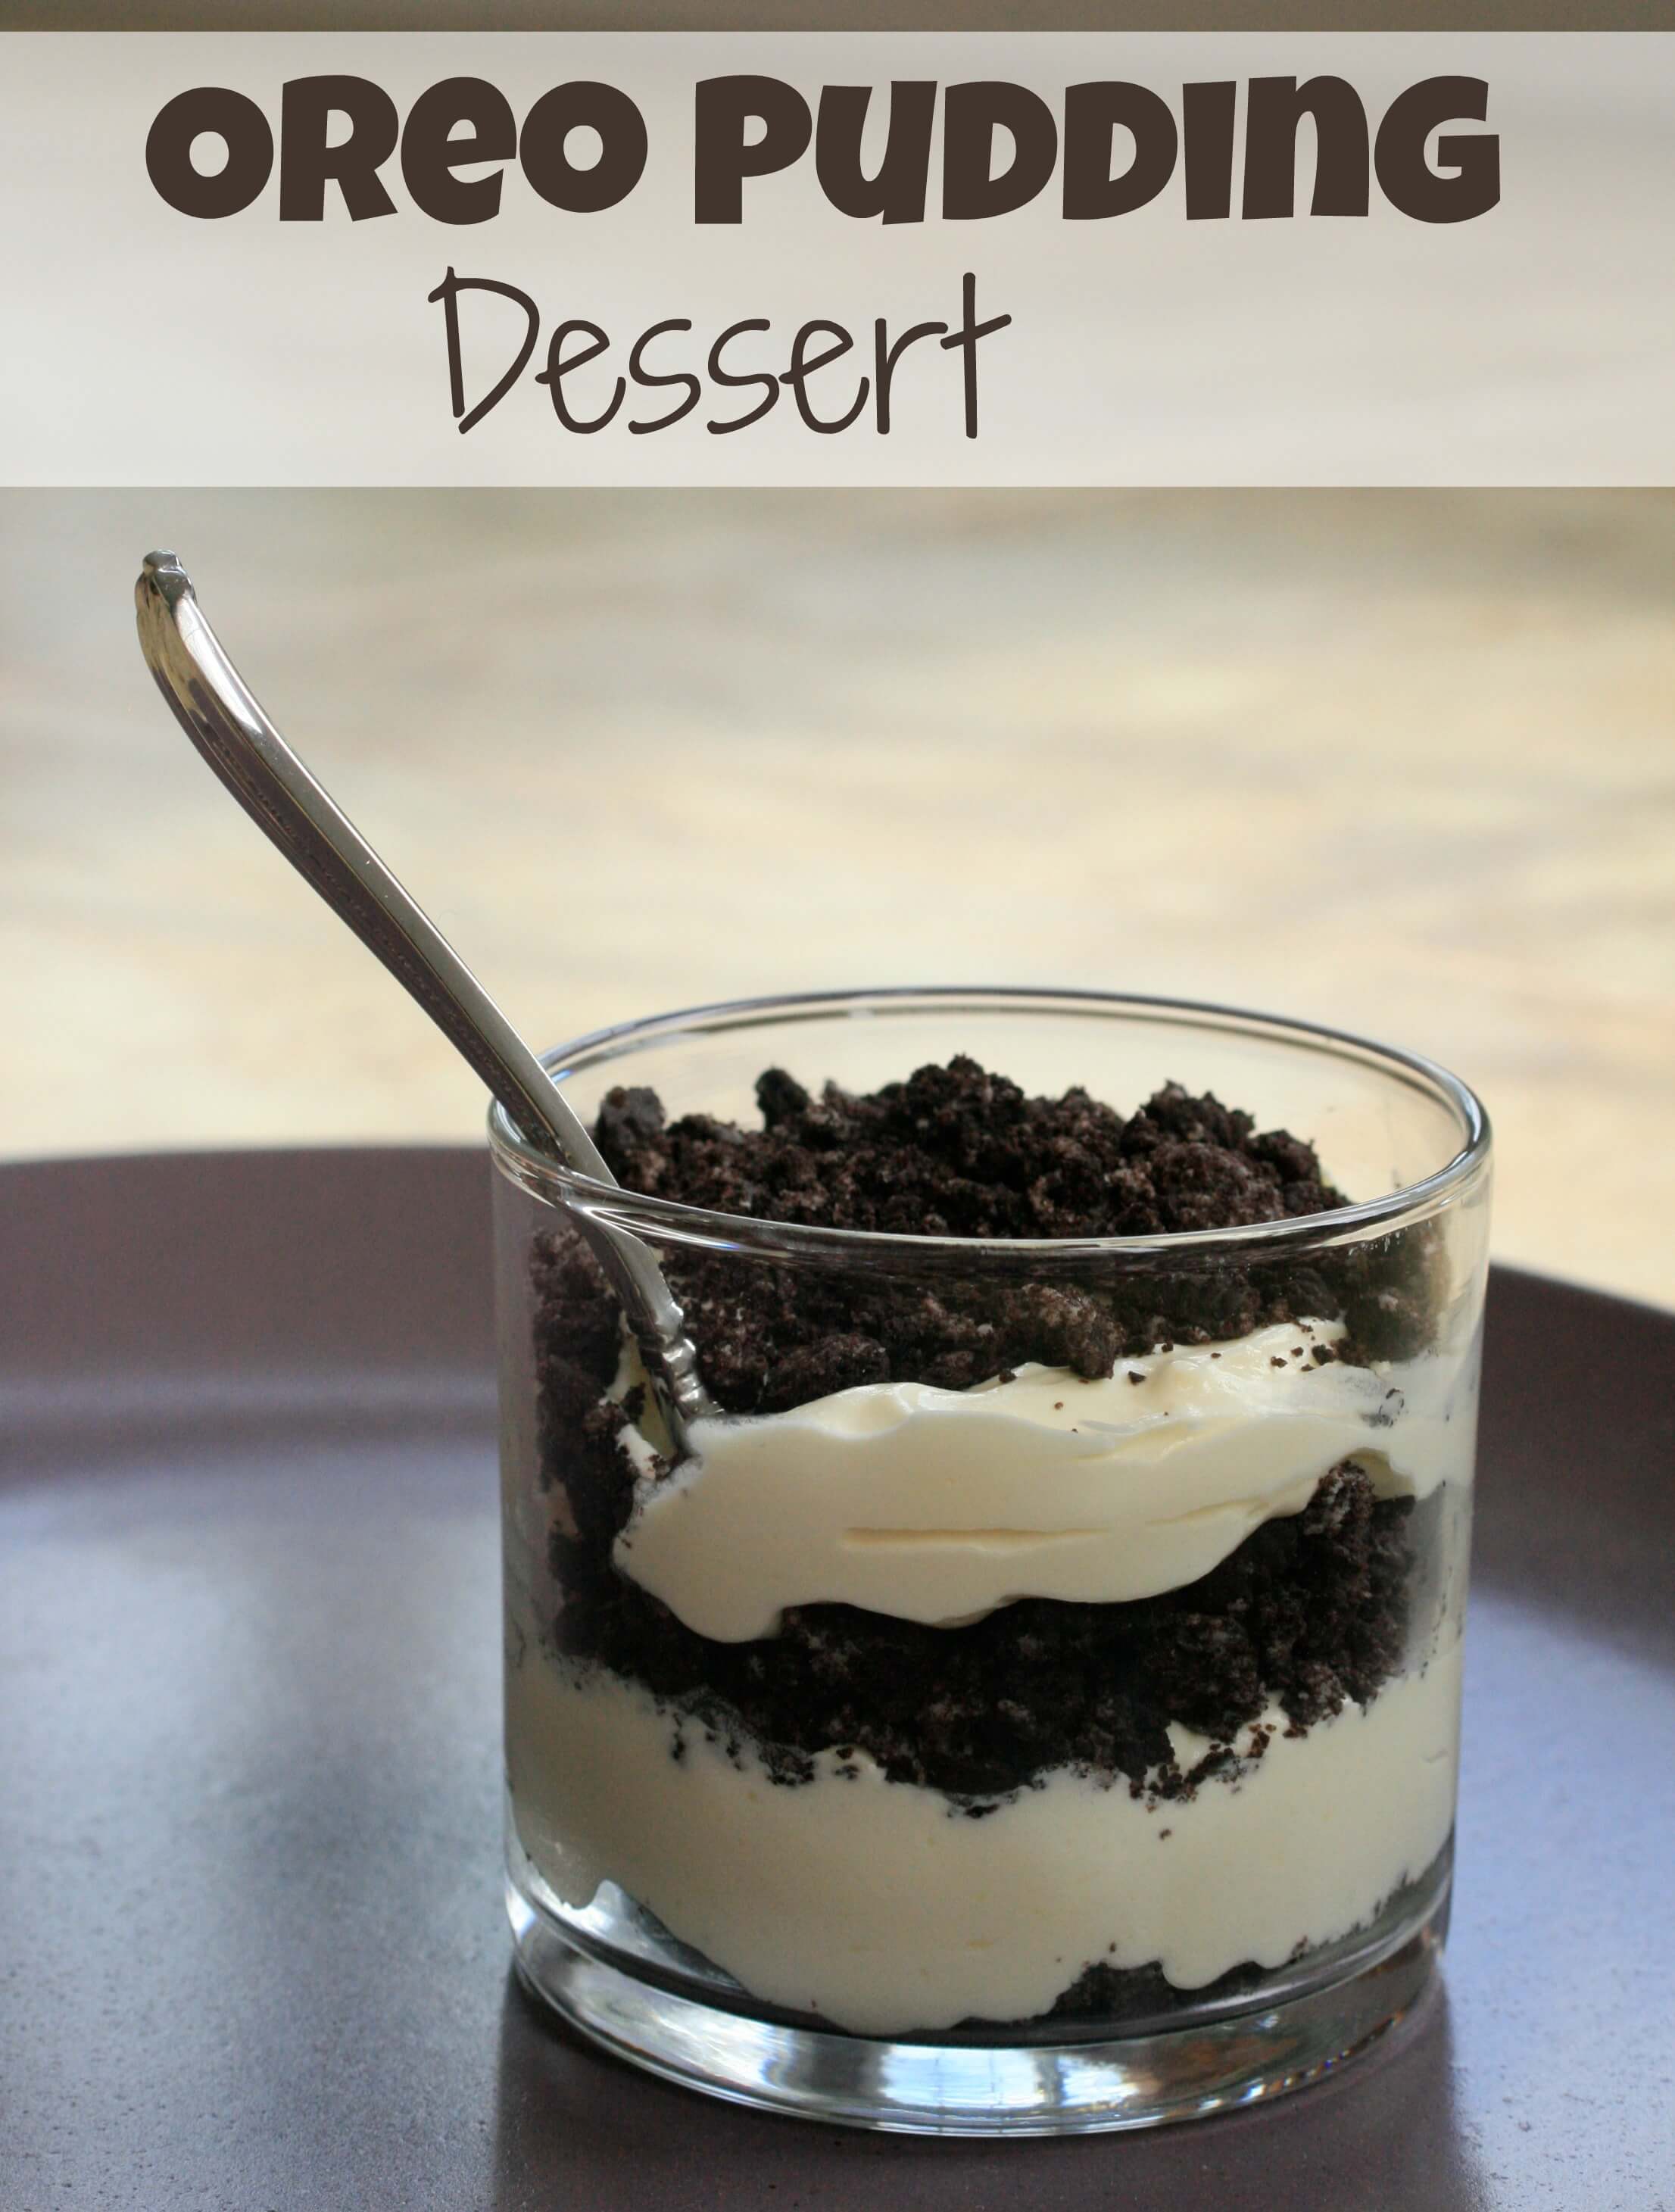 Oreo Pudding Desert Recipe